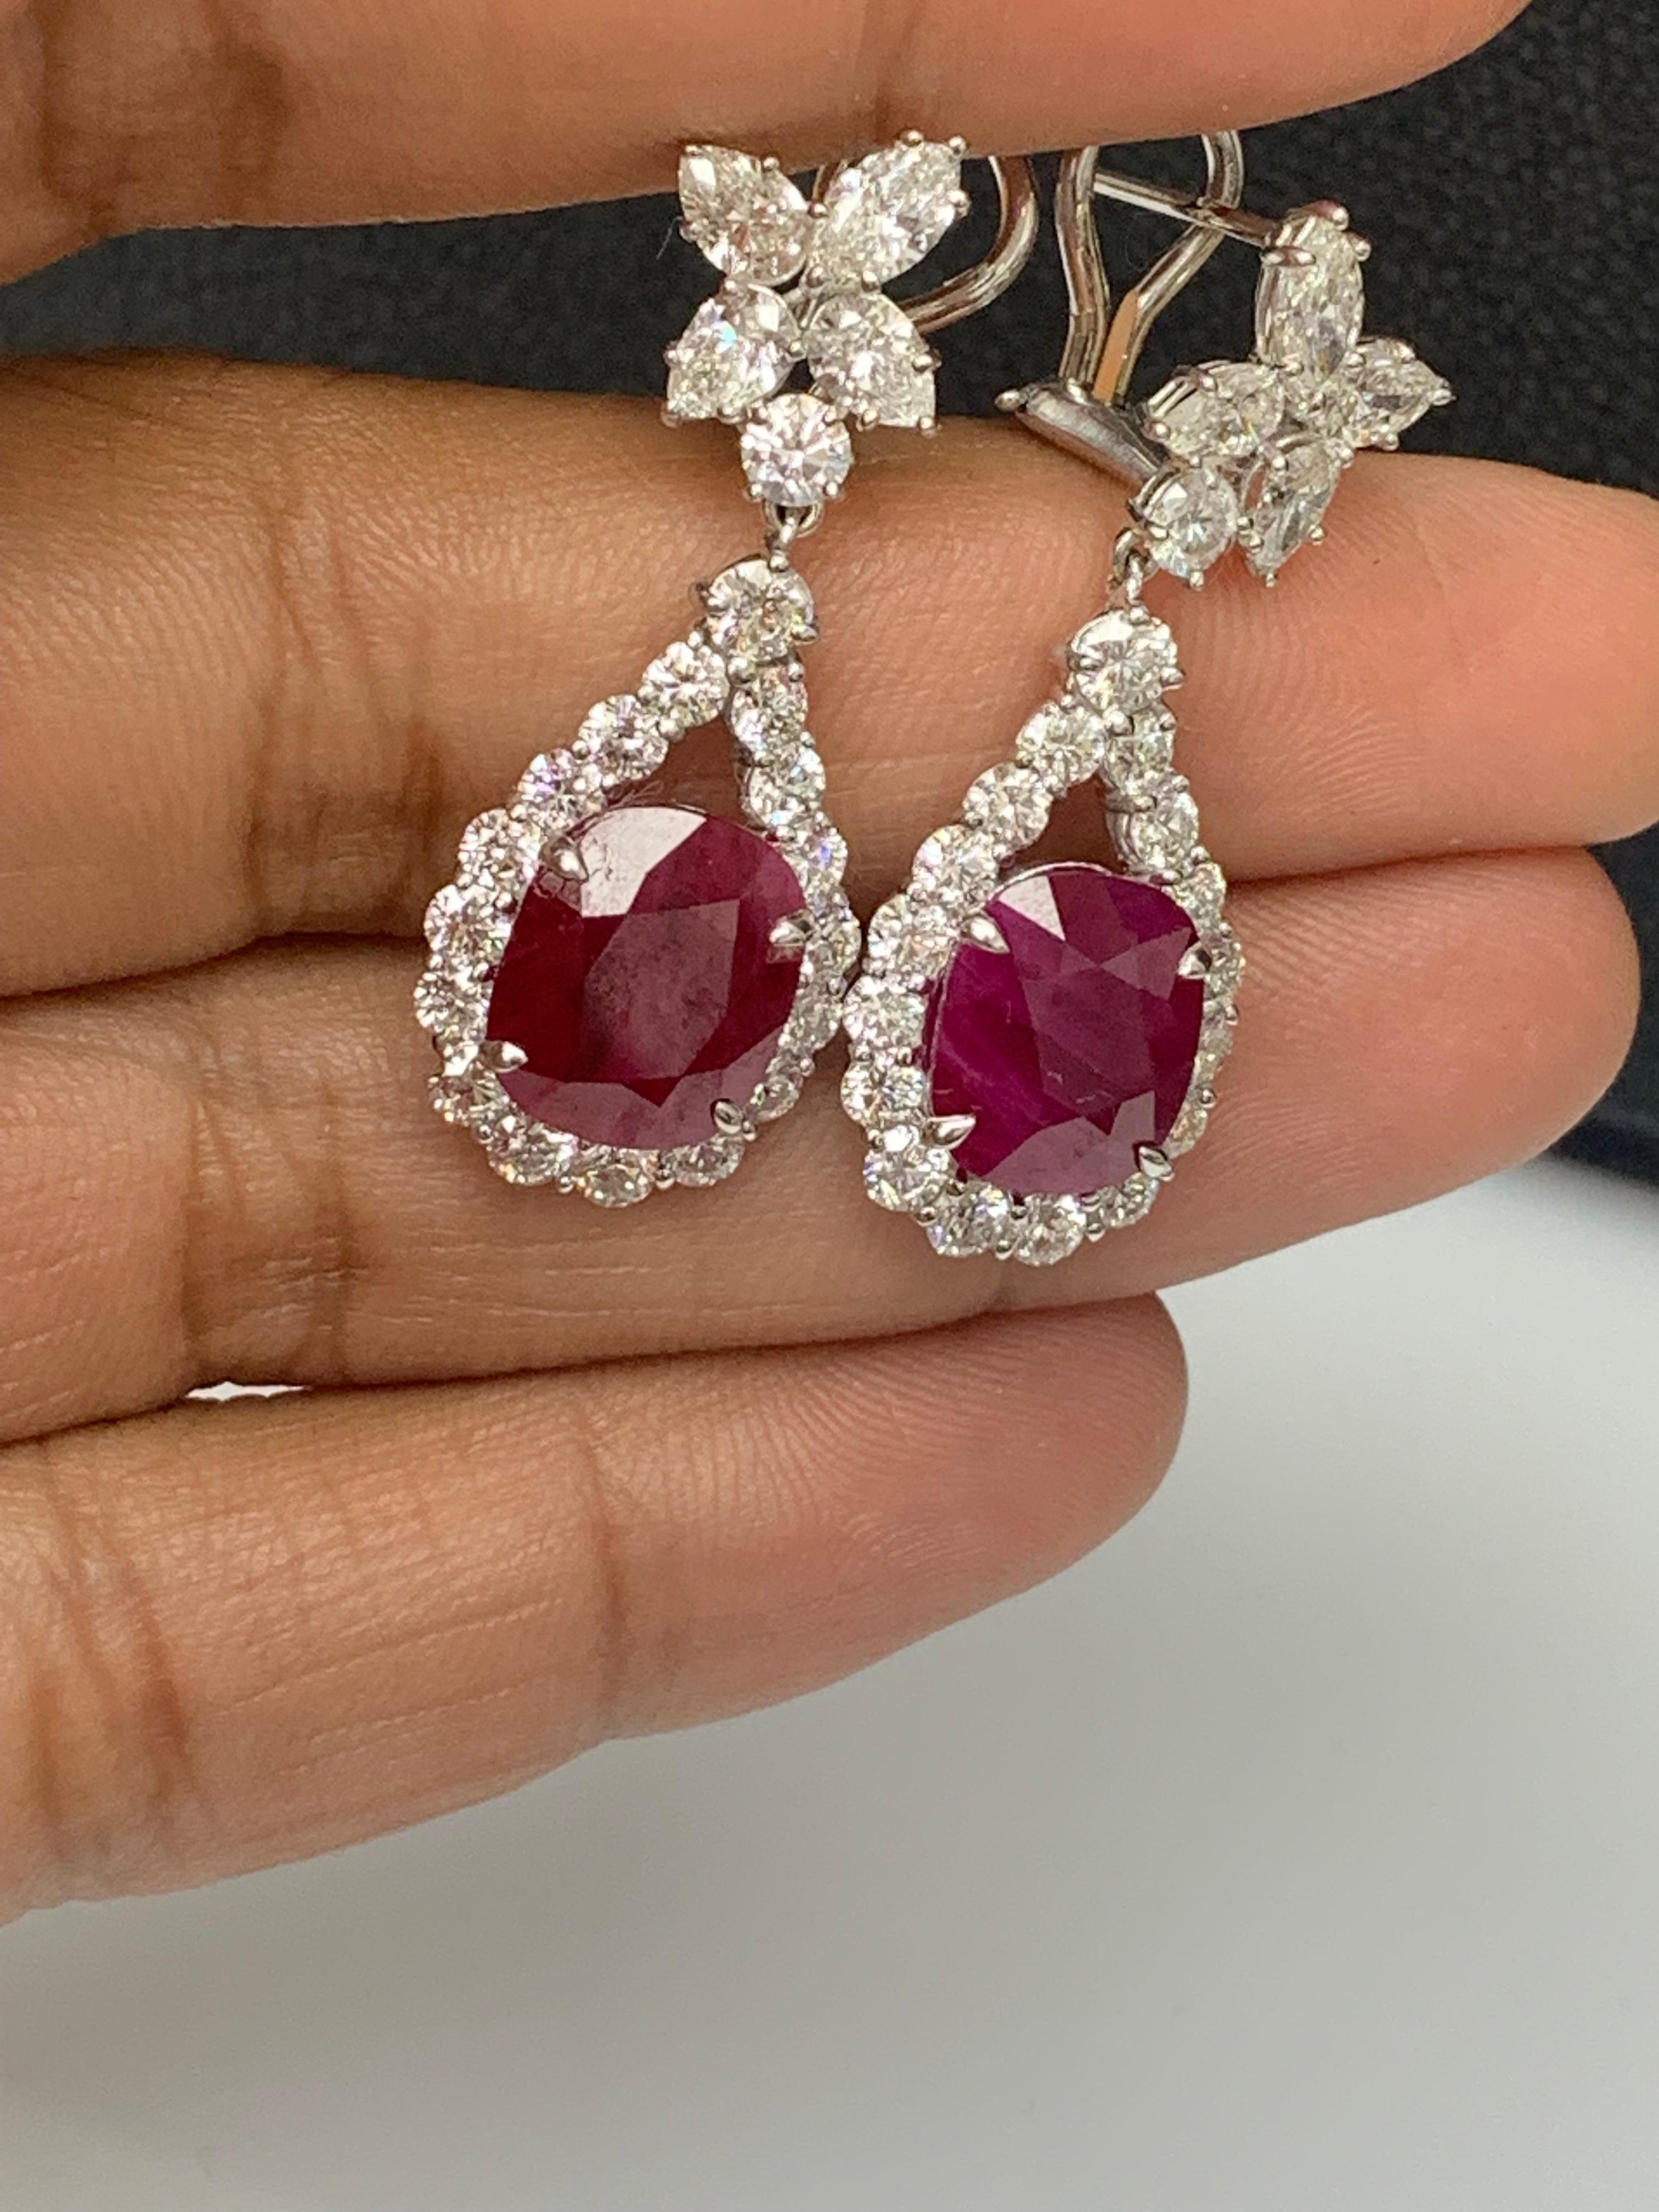 Certified 10.18 Carat Burma Ruby and Diamond Drop Earrings in 18K White Gold For Sale 6